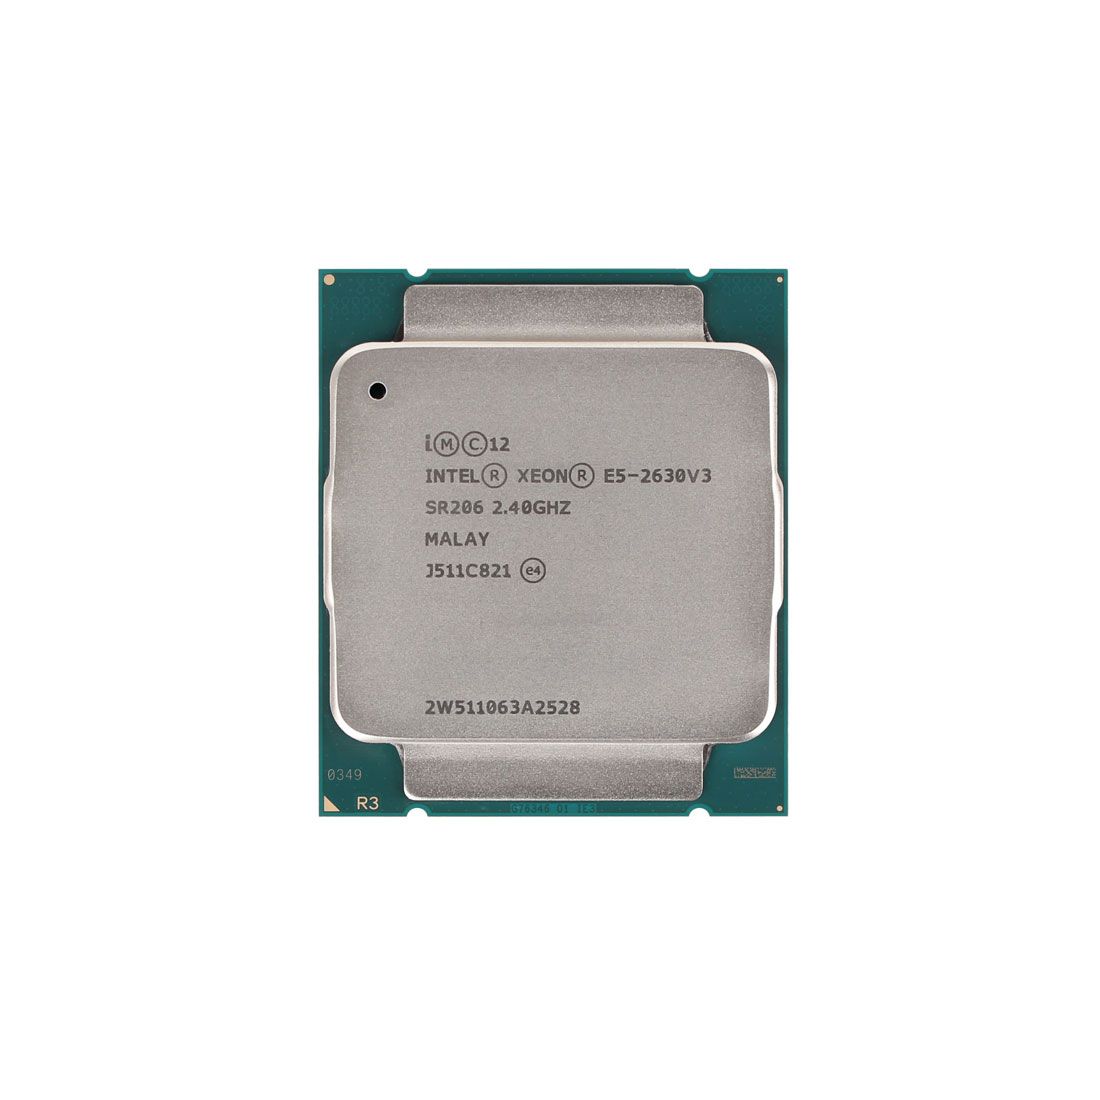 Intel Xeon E5-2630v3 Eight-Core Haswell 2.4GHz 8.0GT/s 20MB LGA 2011-v3 E5-2630 v3 (SR206) Server Processor